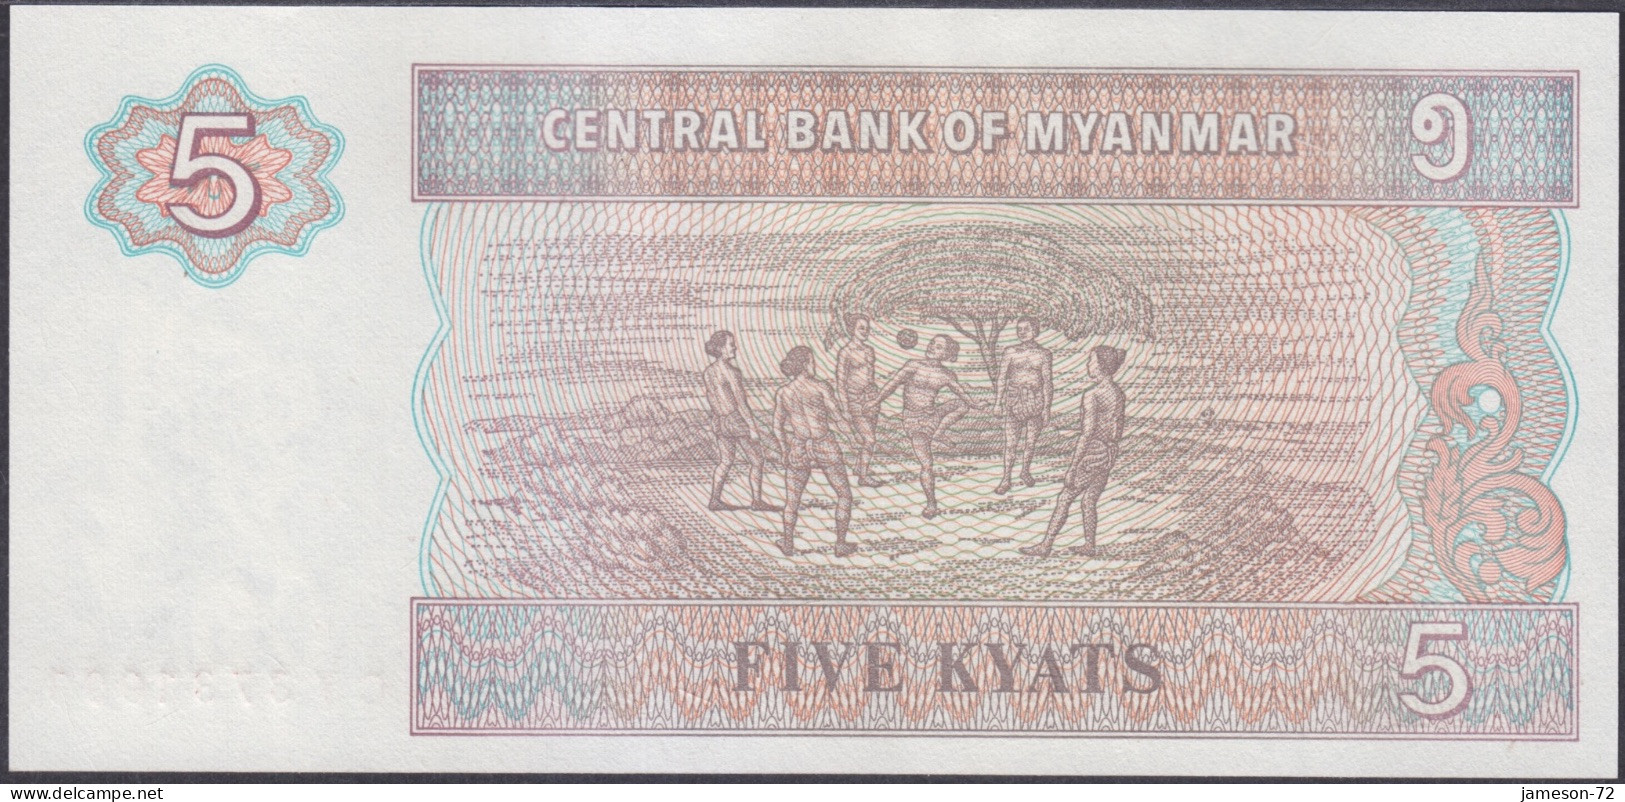 MYANMAR - 5 Kyat ND (1996) P# 70 Central Bank Of Myanmar Asia Banknote - Edelweiss Coins - Myanmar